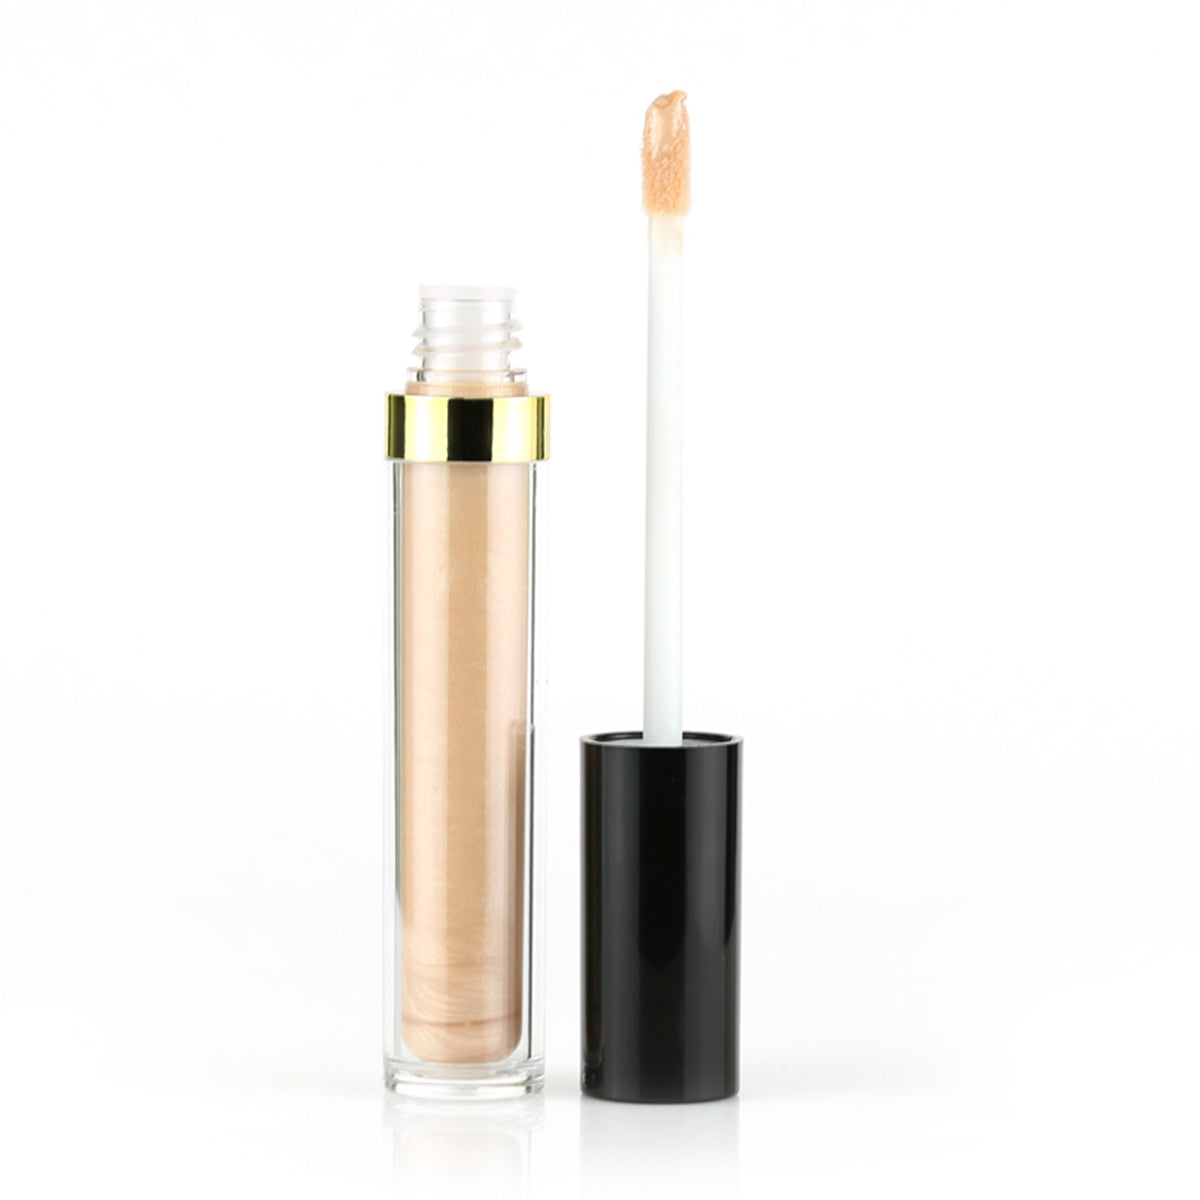 Revlon Super Lustrous Lipstick, Shine, Sparkling Honey 006 - 0.11 oz